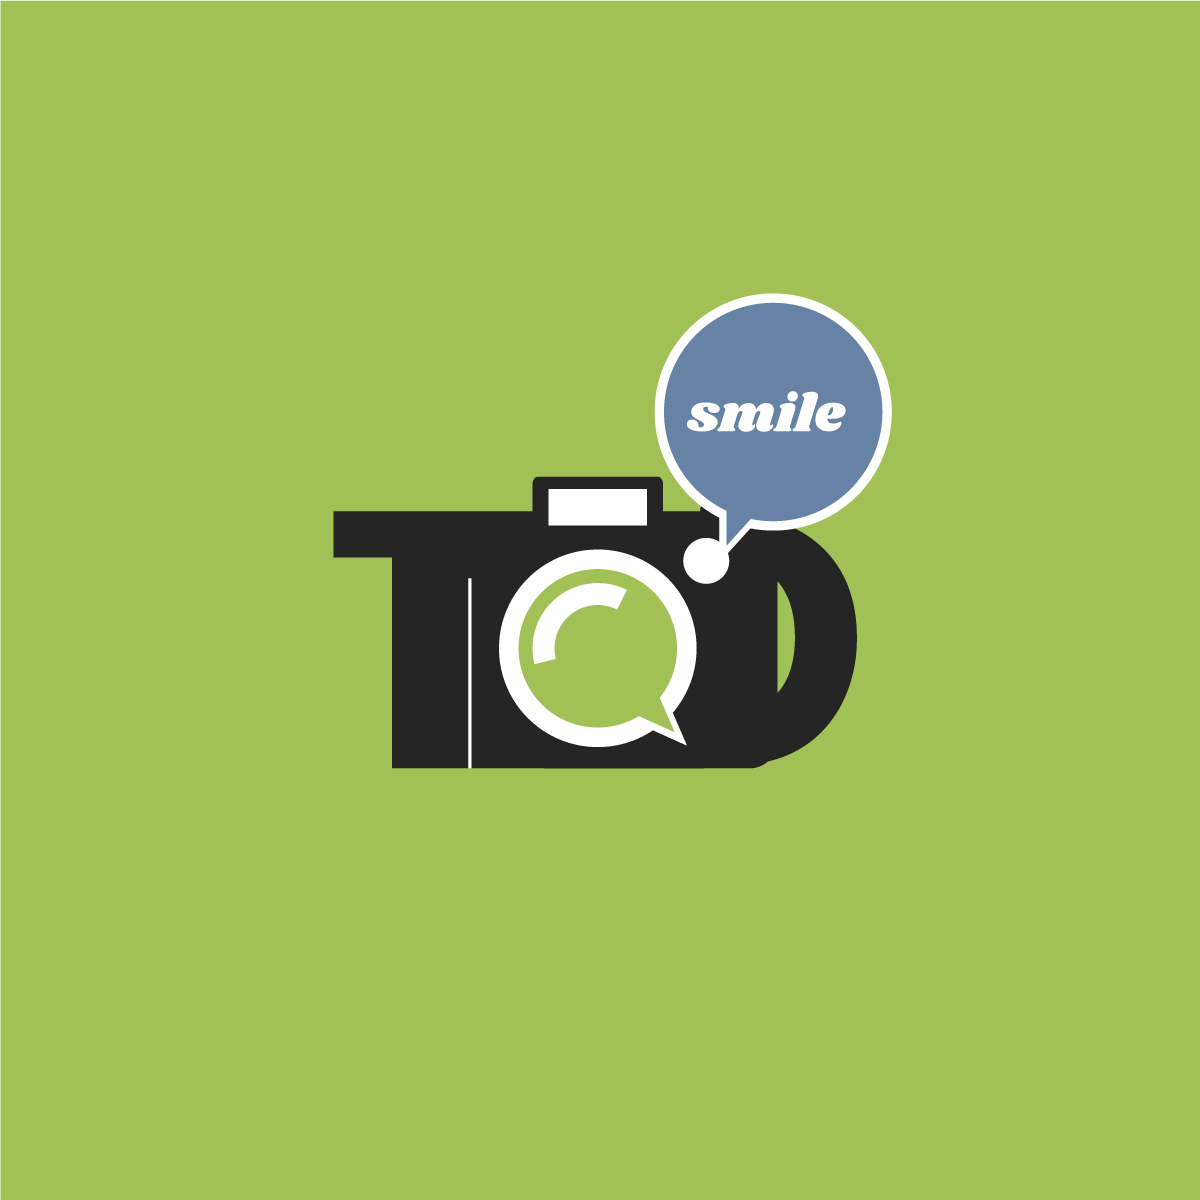 photographer logo design